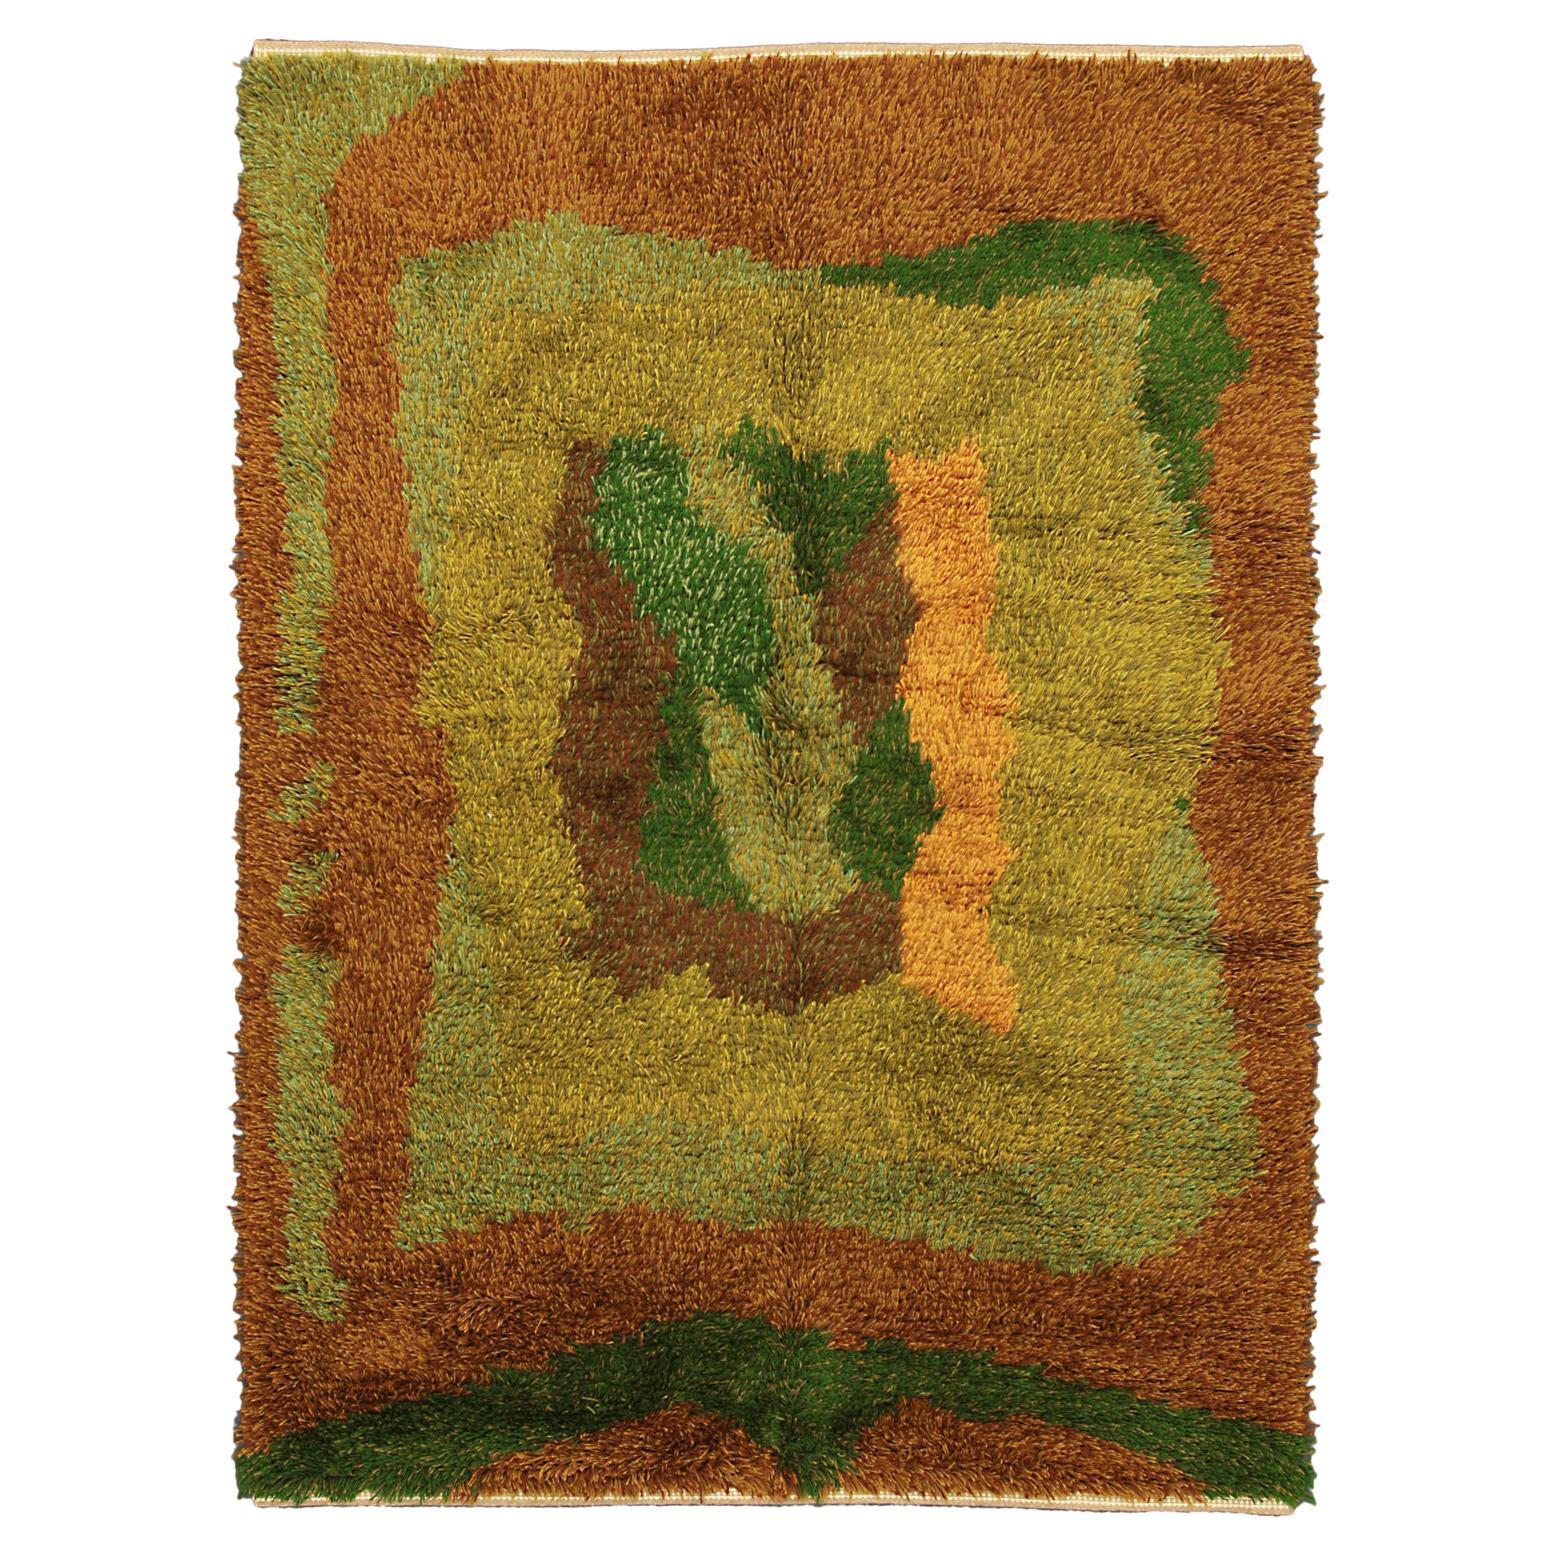 Swedish Wool Rya Green Olive Field Color Vintage, 1920-1950